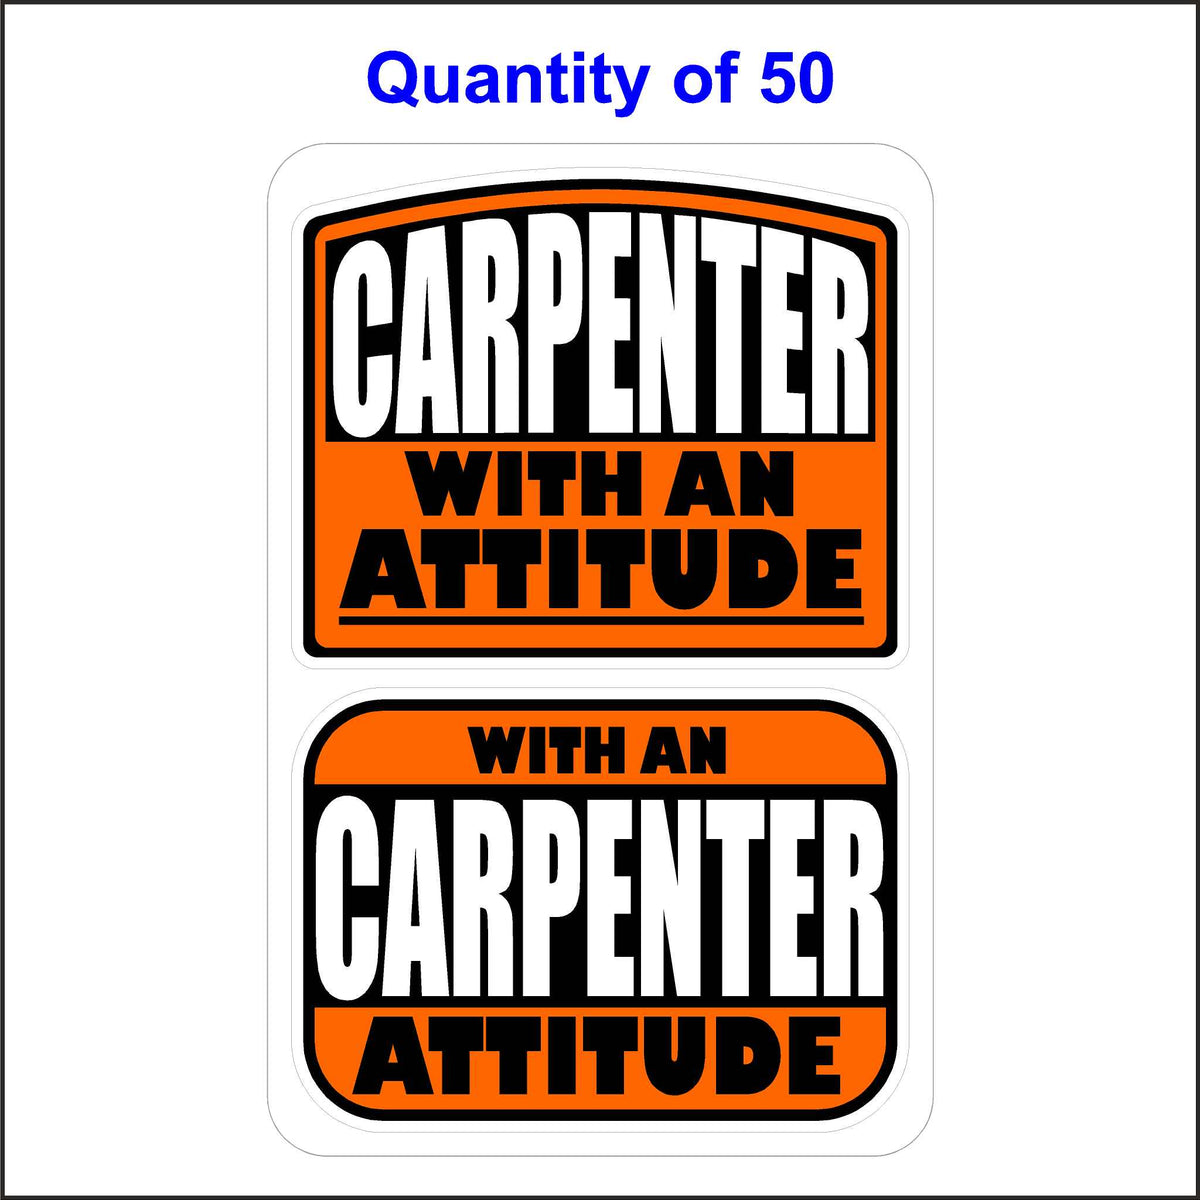 Carpenter With an Attitude Stickers 50 Quantity.